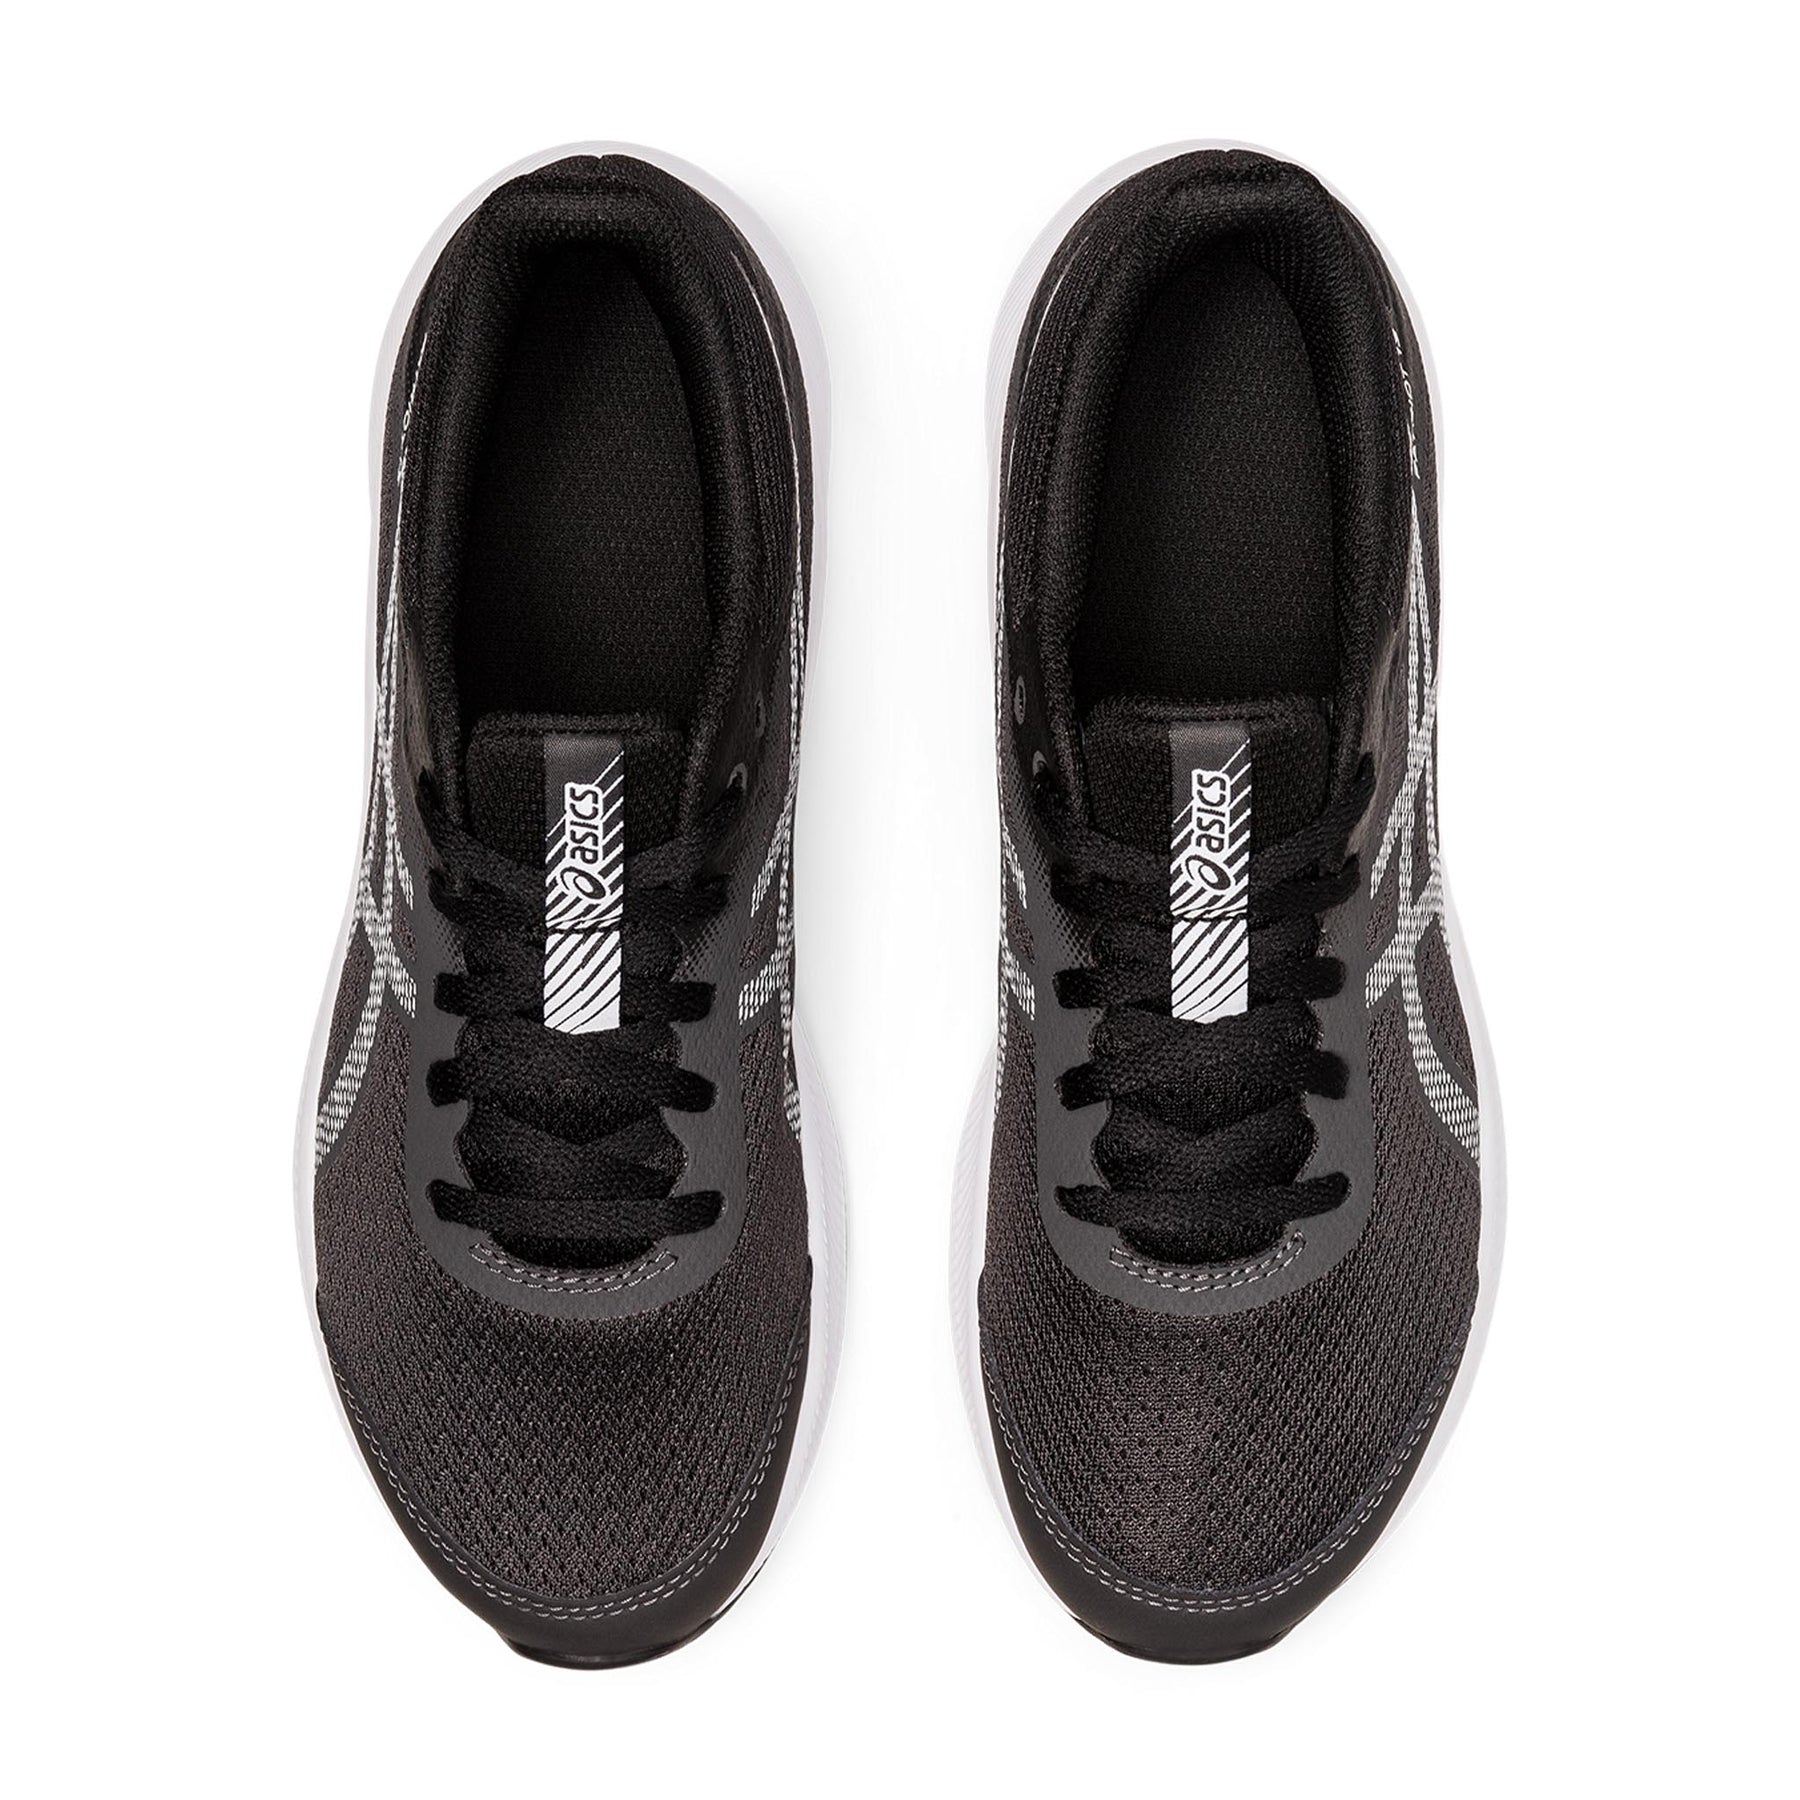 Asics Patriot 13 GS Kids Running Shoes: Graphite Grey/White